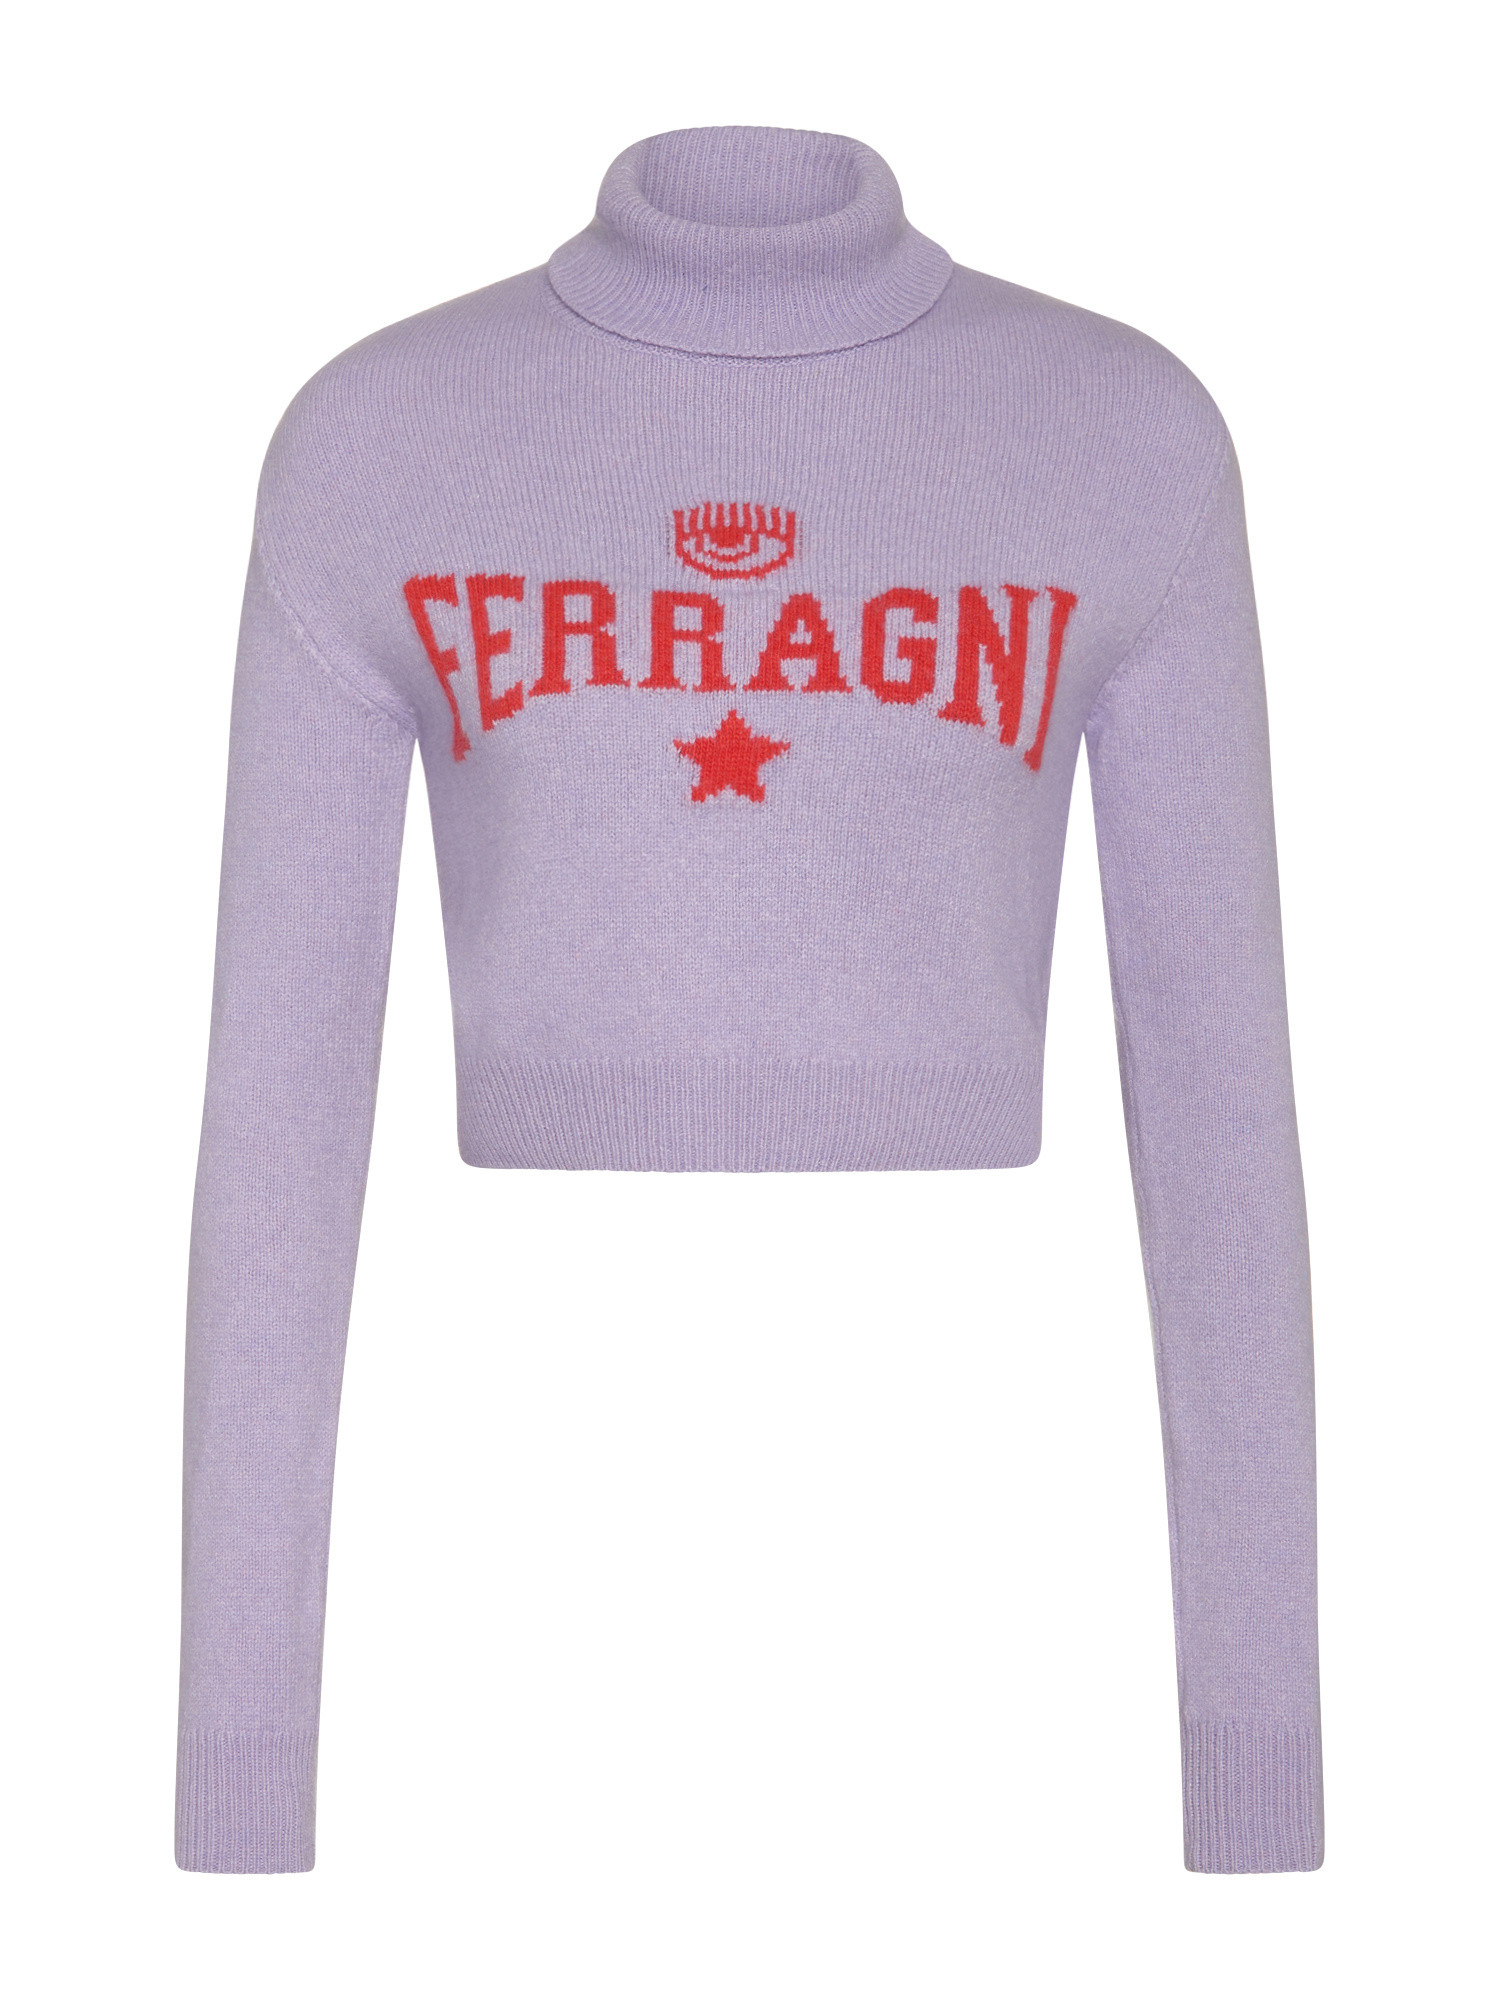 Chiara Ferragni - Ferragni stretch turtleneck, Purple Lilac, large image number 0